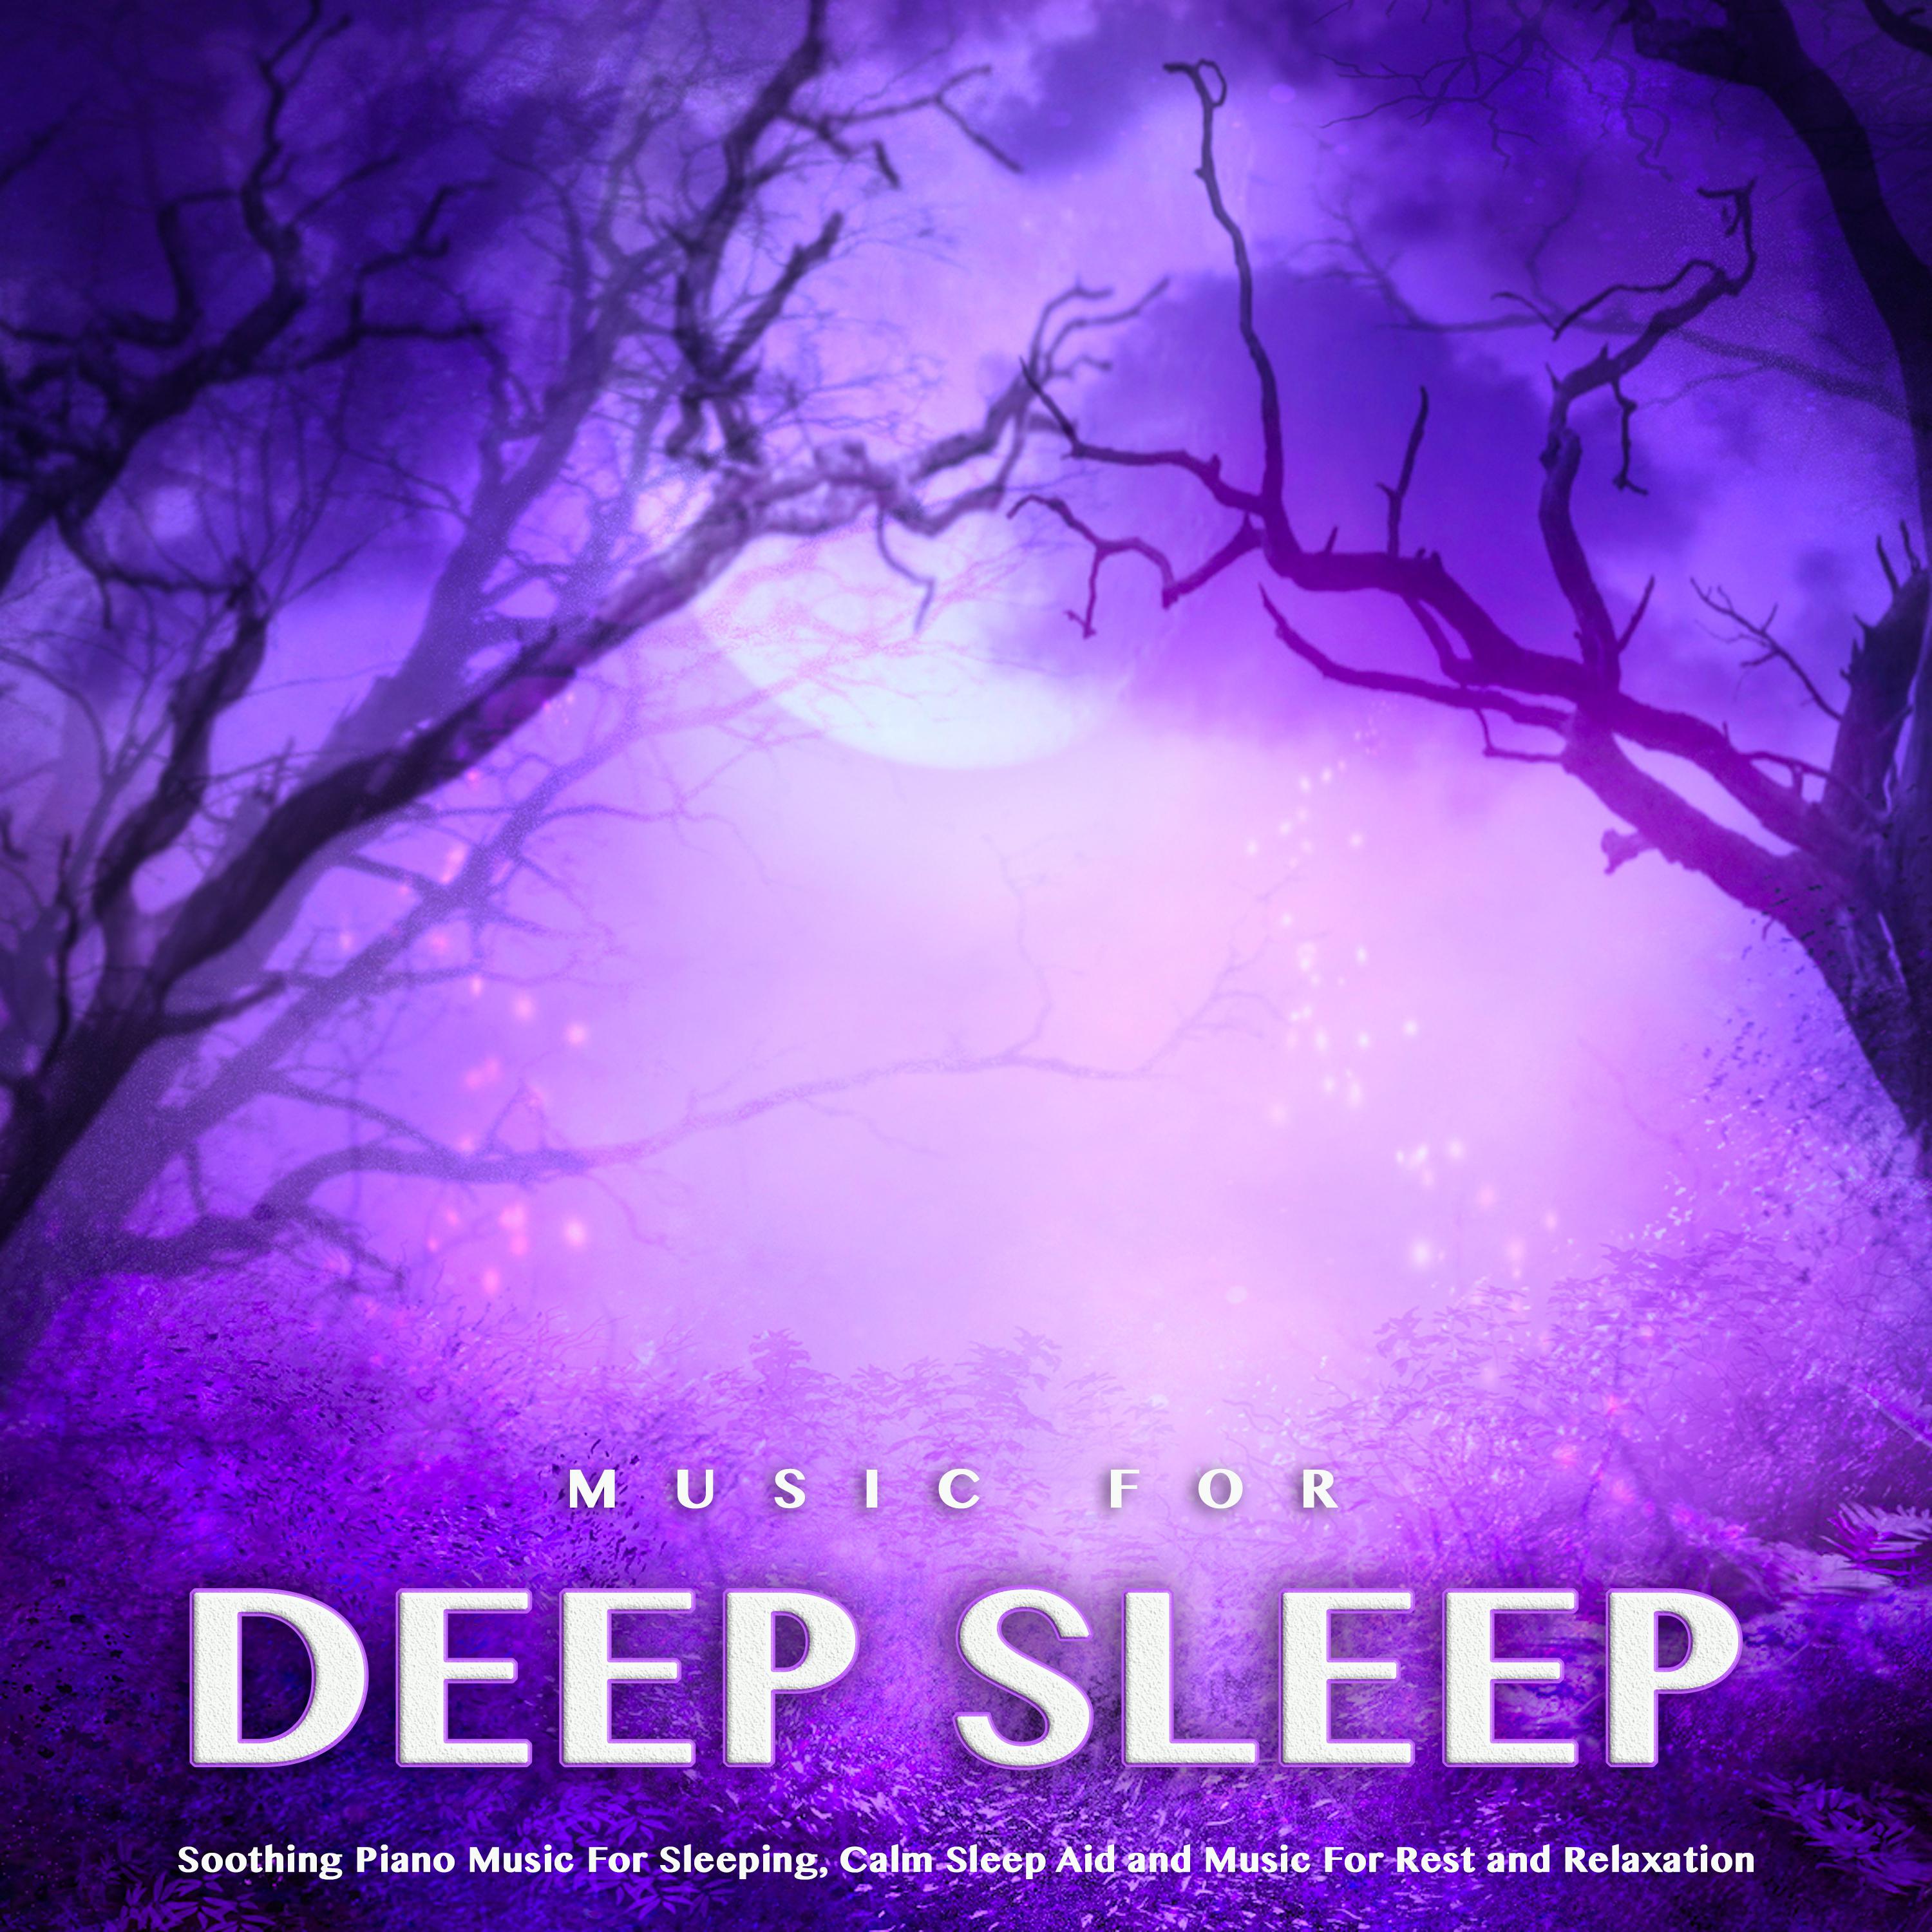 The Best Sleep Music